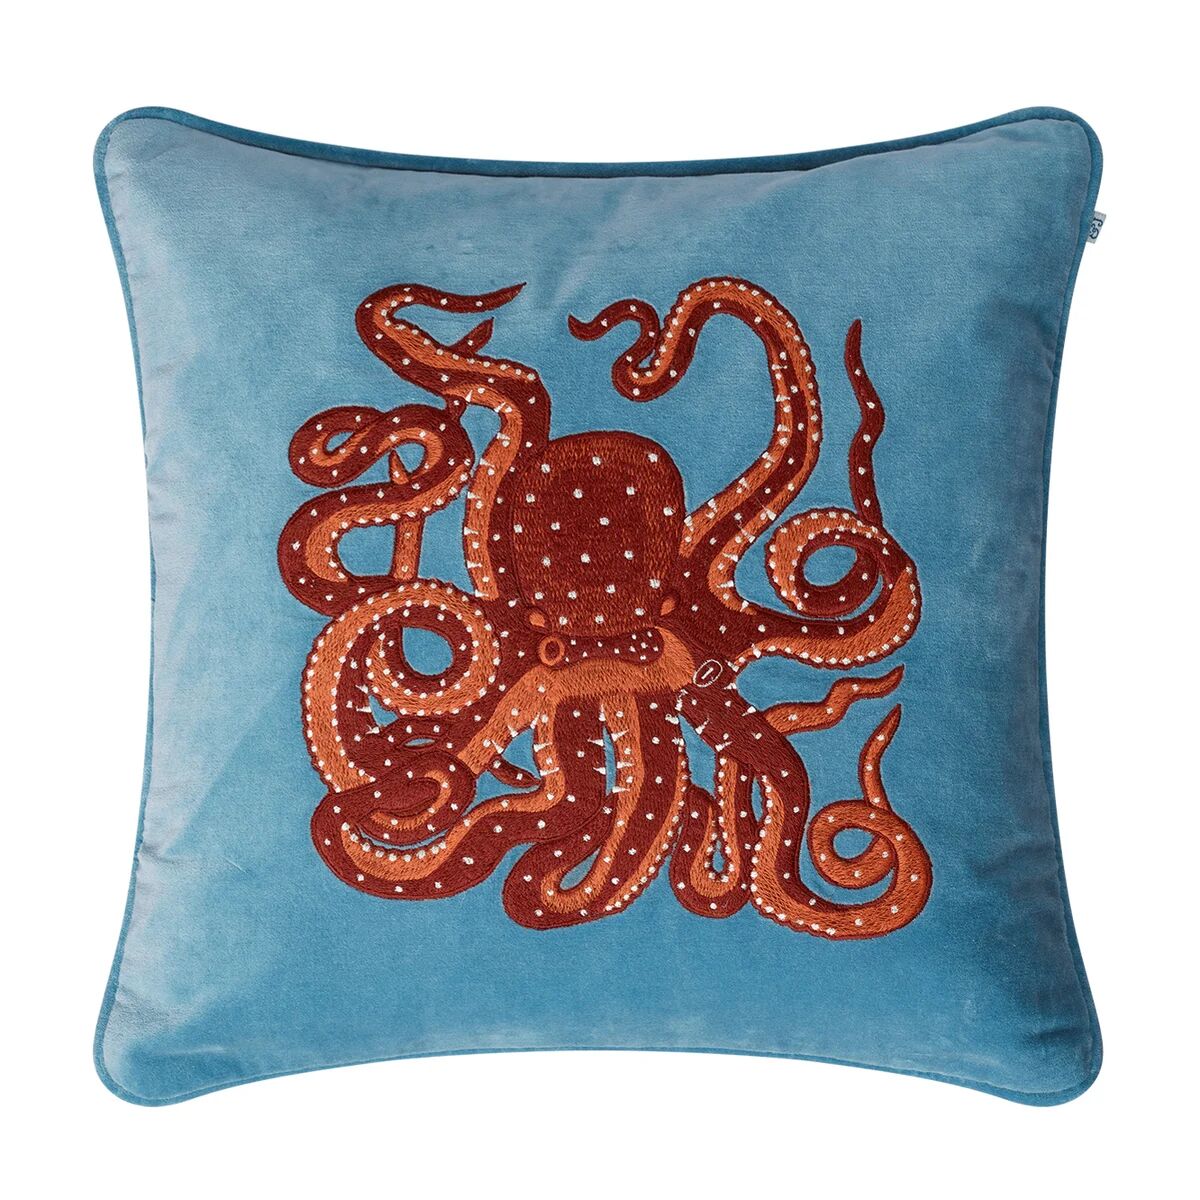 Chhatwal & Jonsson Embroidered Octopus putetrekk 50x50 cm Heaven blue-oransje-rose